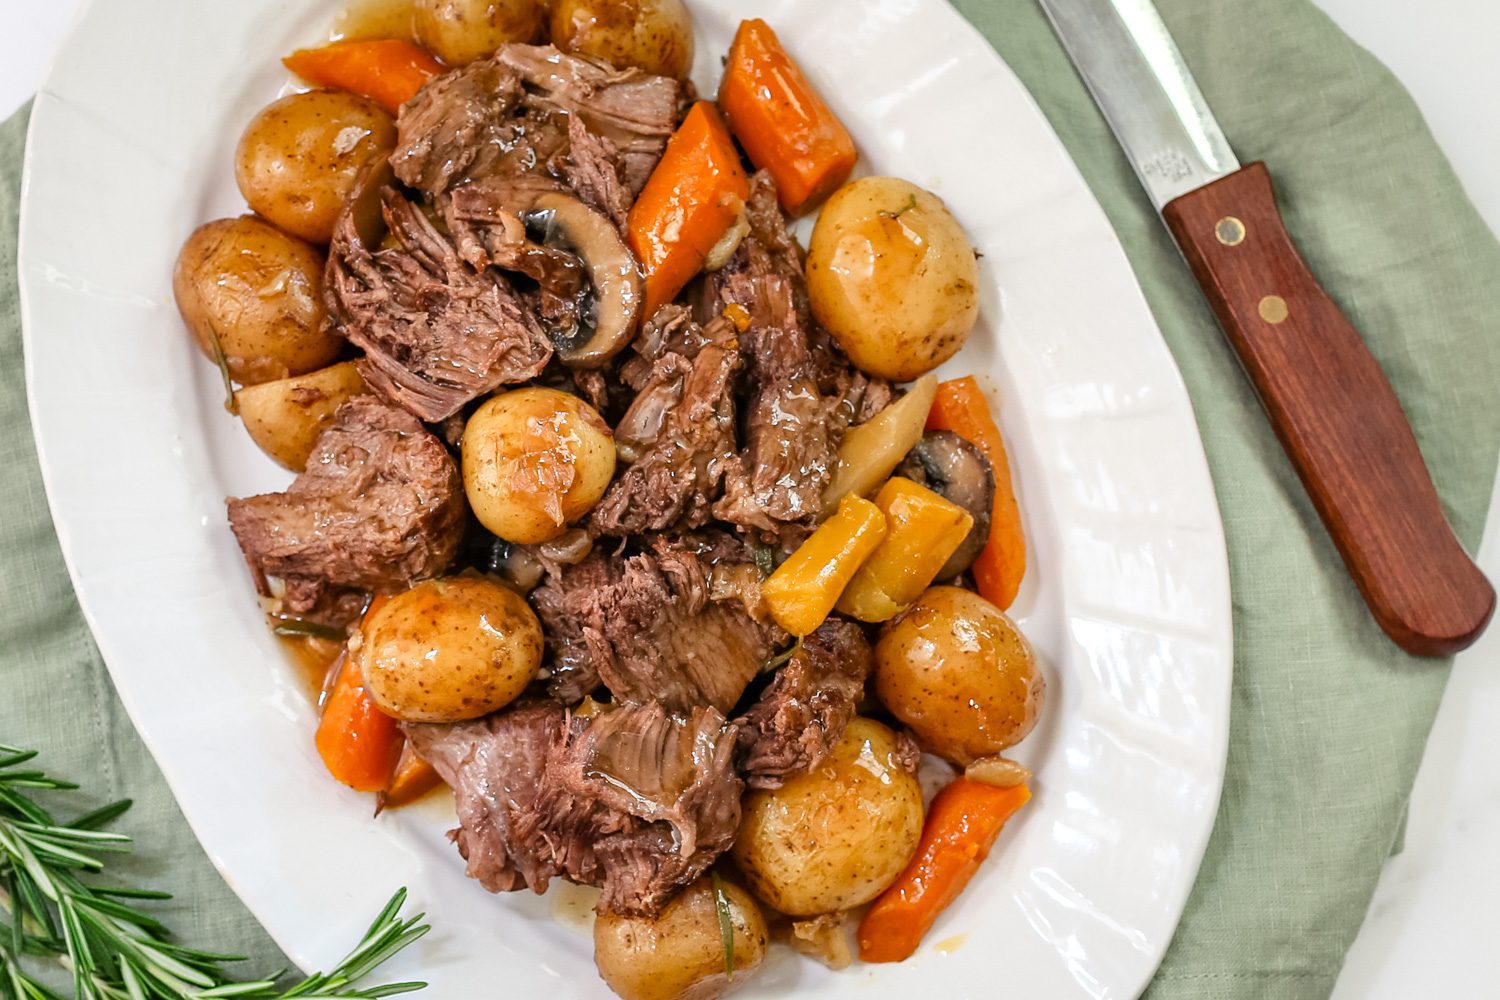 a pot roast with potatoes, carrots, and onion soup